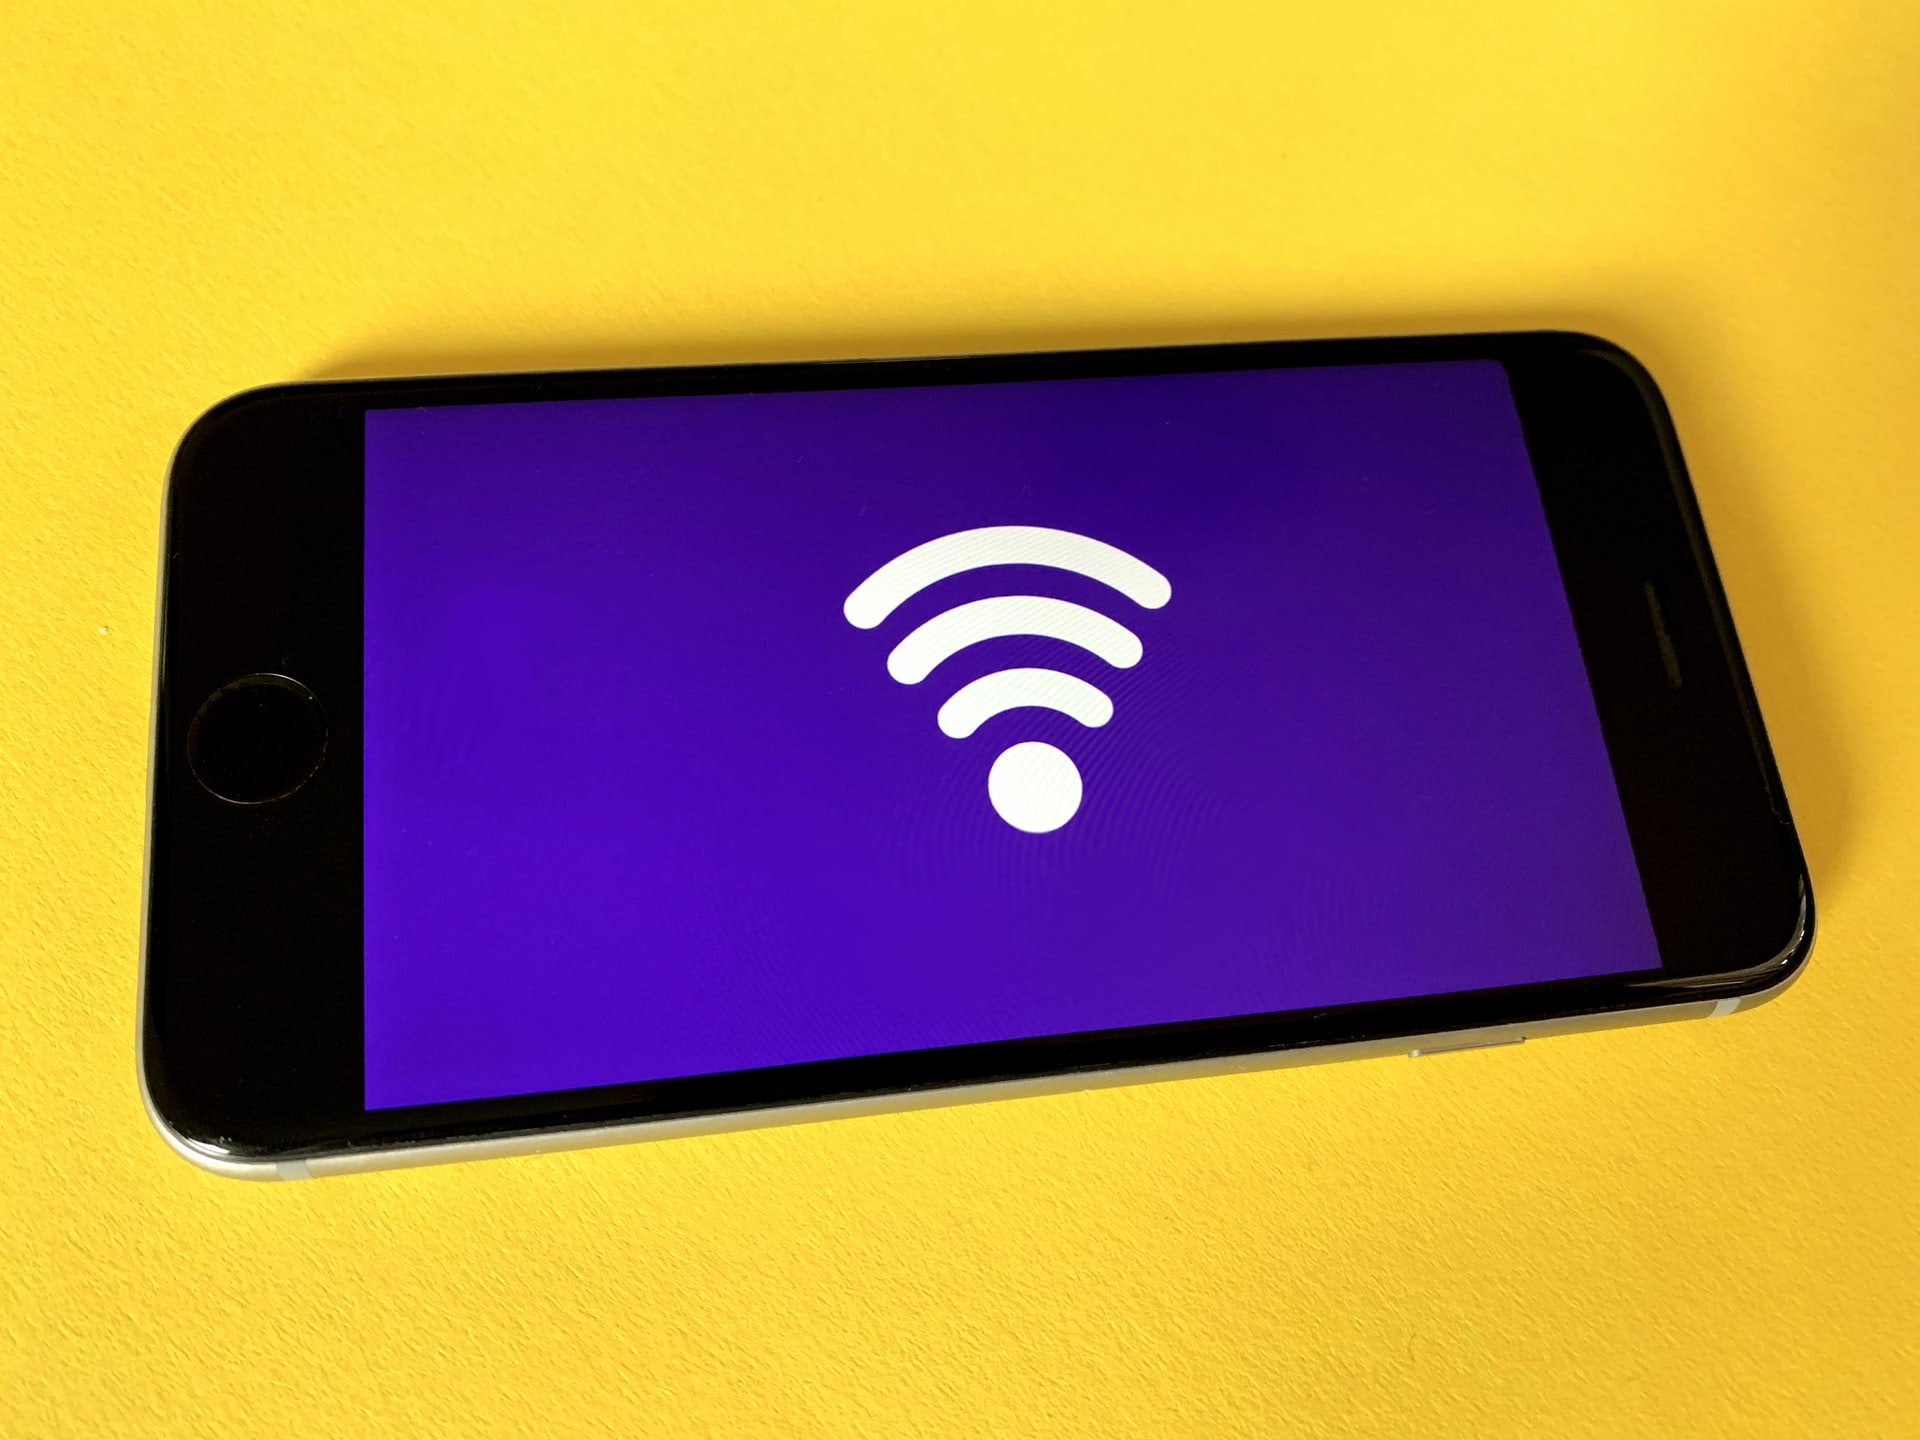 Perbedaan MiFi dan WiFi beserta Kelebihan dan Kekurangannya